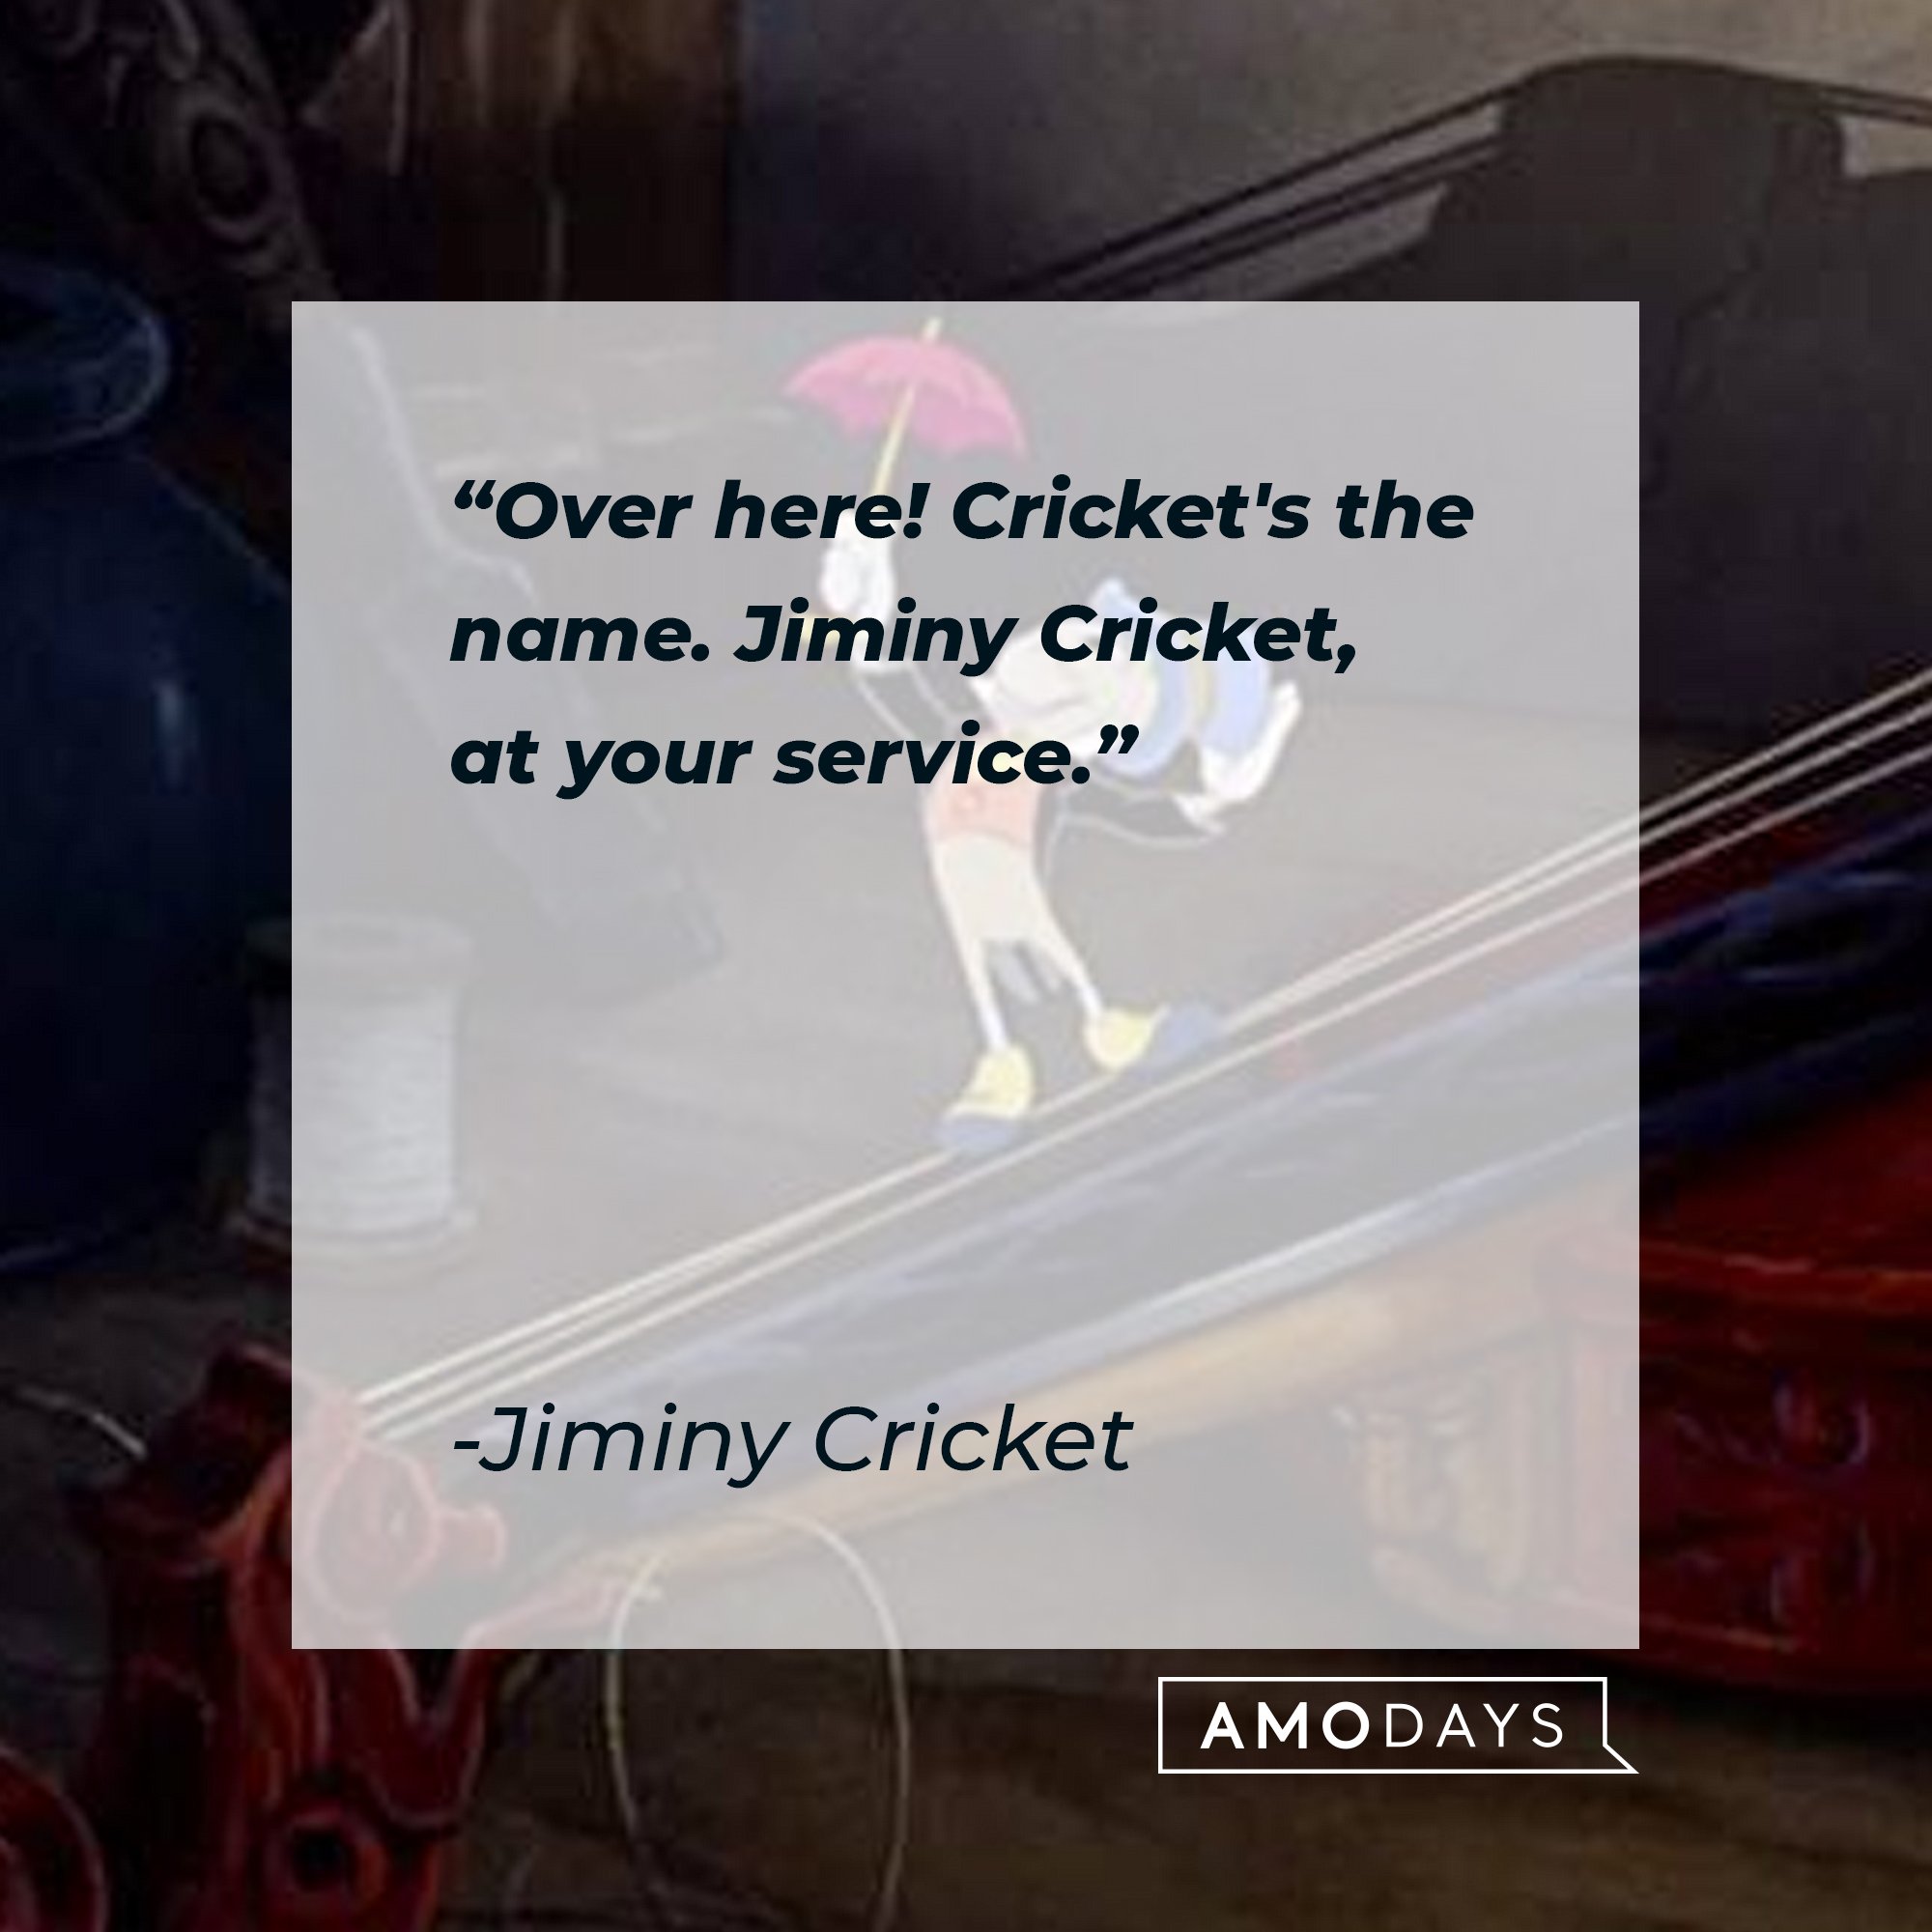  Jiminy Cricket's quote: "Over here! Cricket's the name. Jiminy Cricket, at your service." |  Image: AmoDays